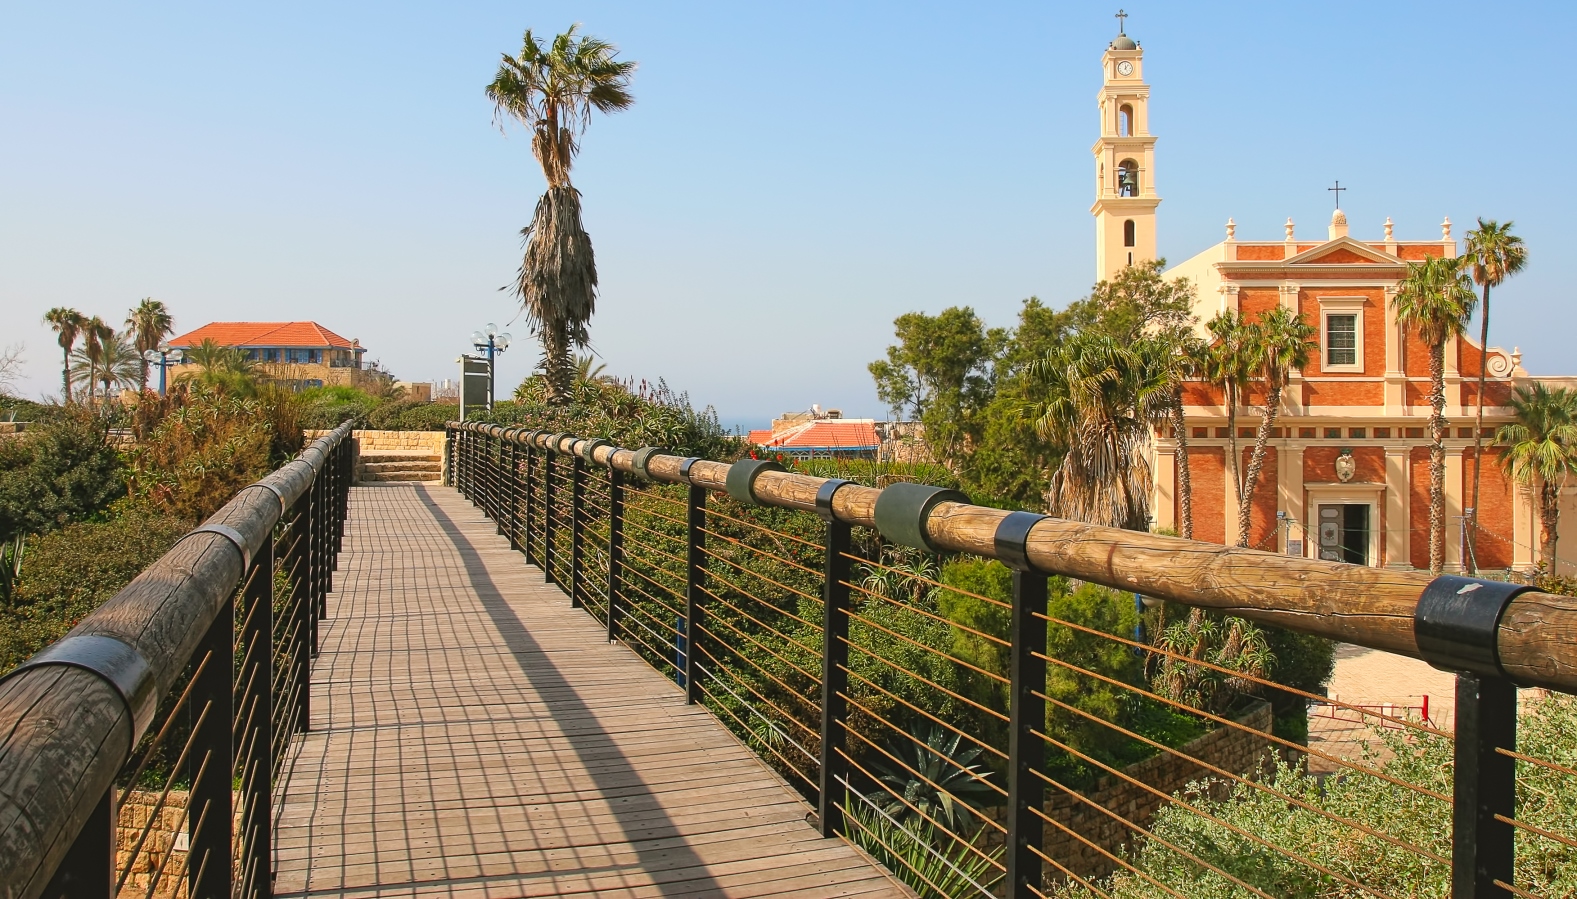 Wishing Bridge in Old Jaffa. Photo by Rostislav Glinsky via Shutterstock.com